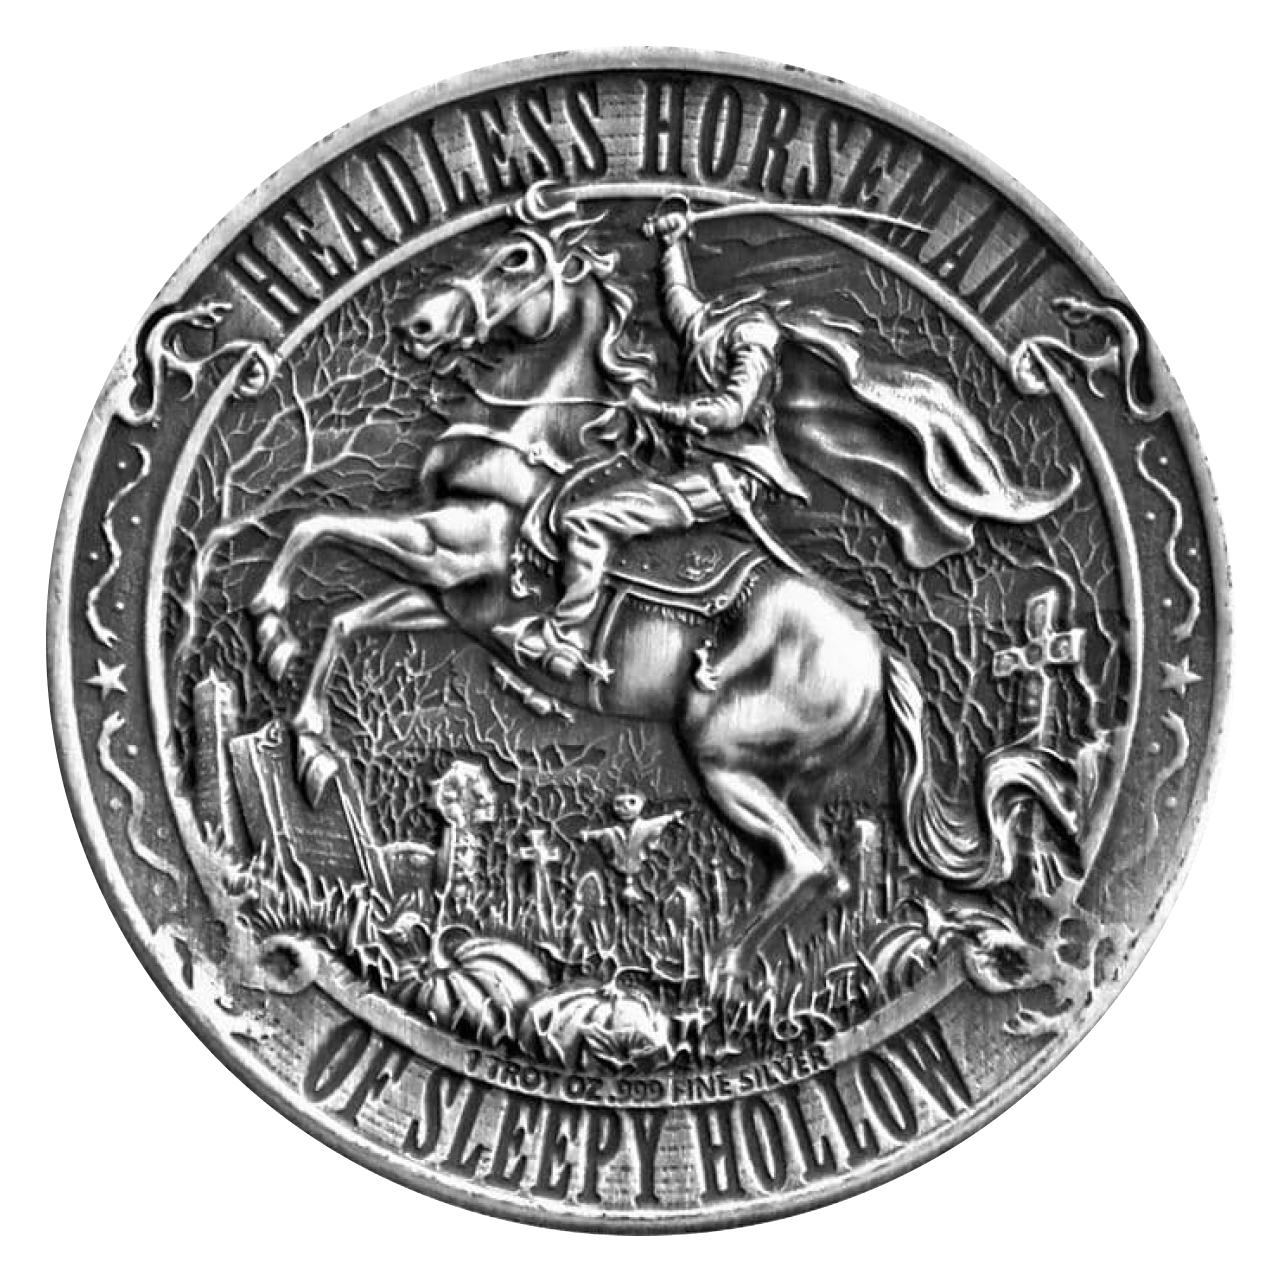 Headless Horseman 1 oz Silver Round (Antique Finish)